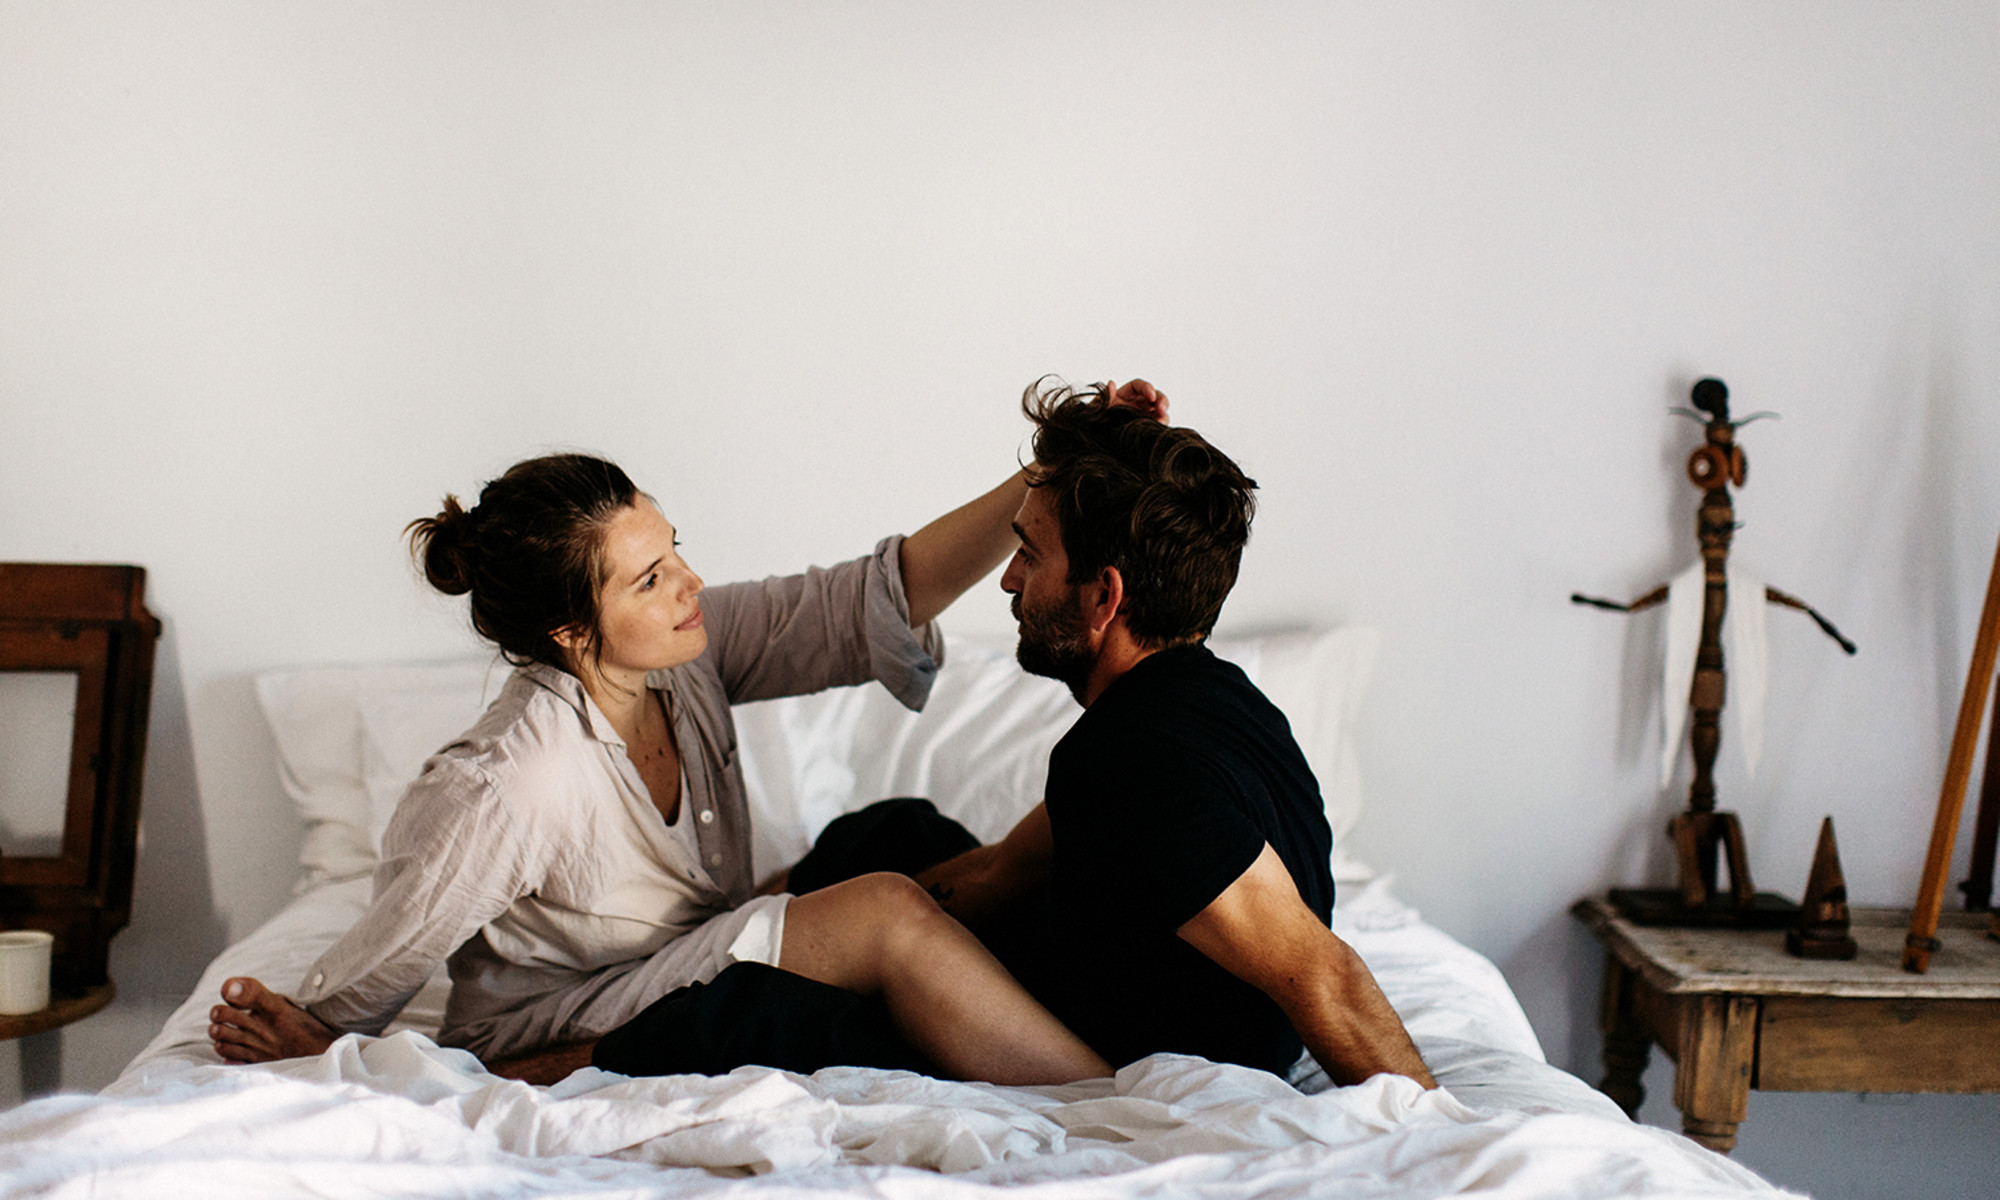 Is It OK To Masturbate When Your Partner Is Home? mindbodygreen image